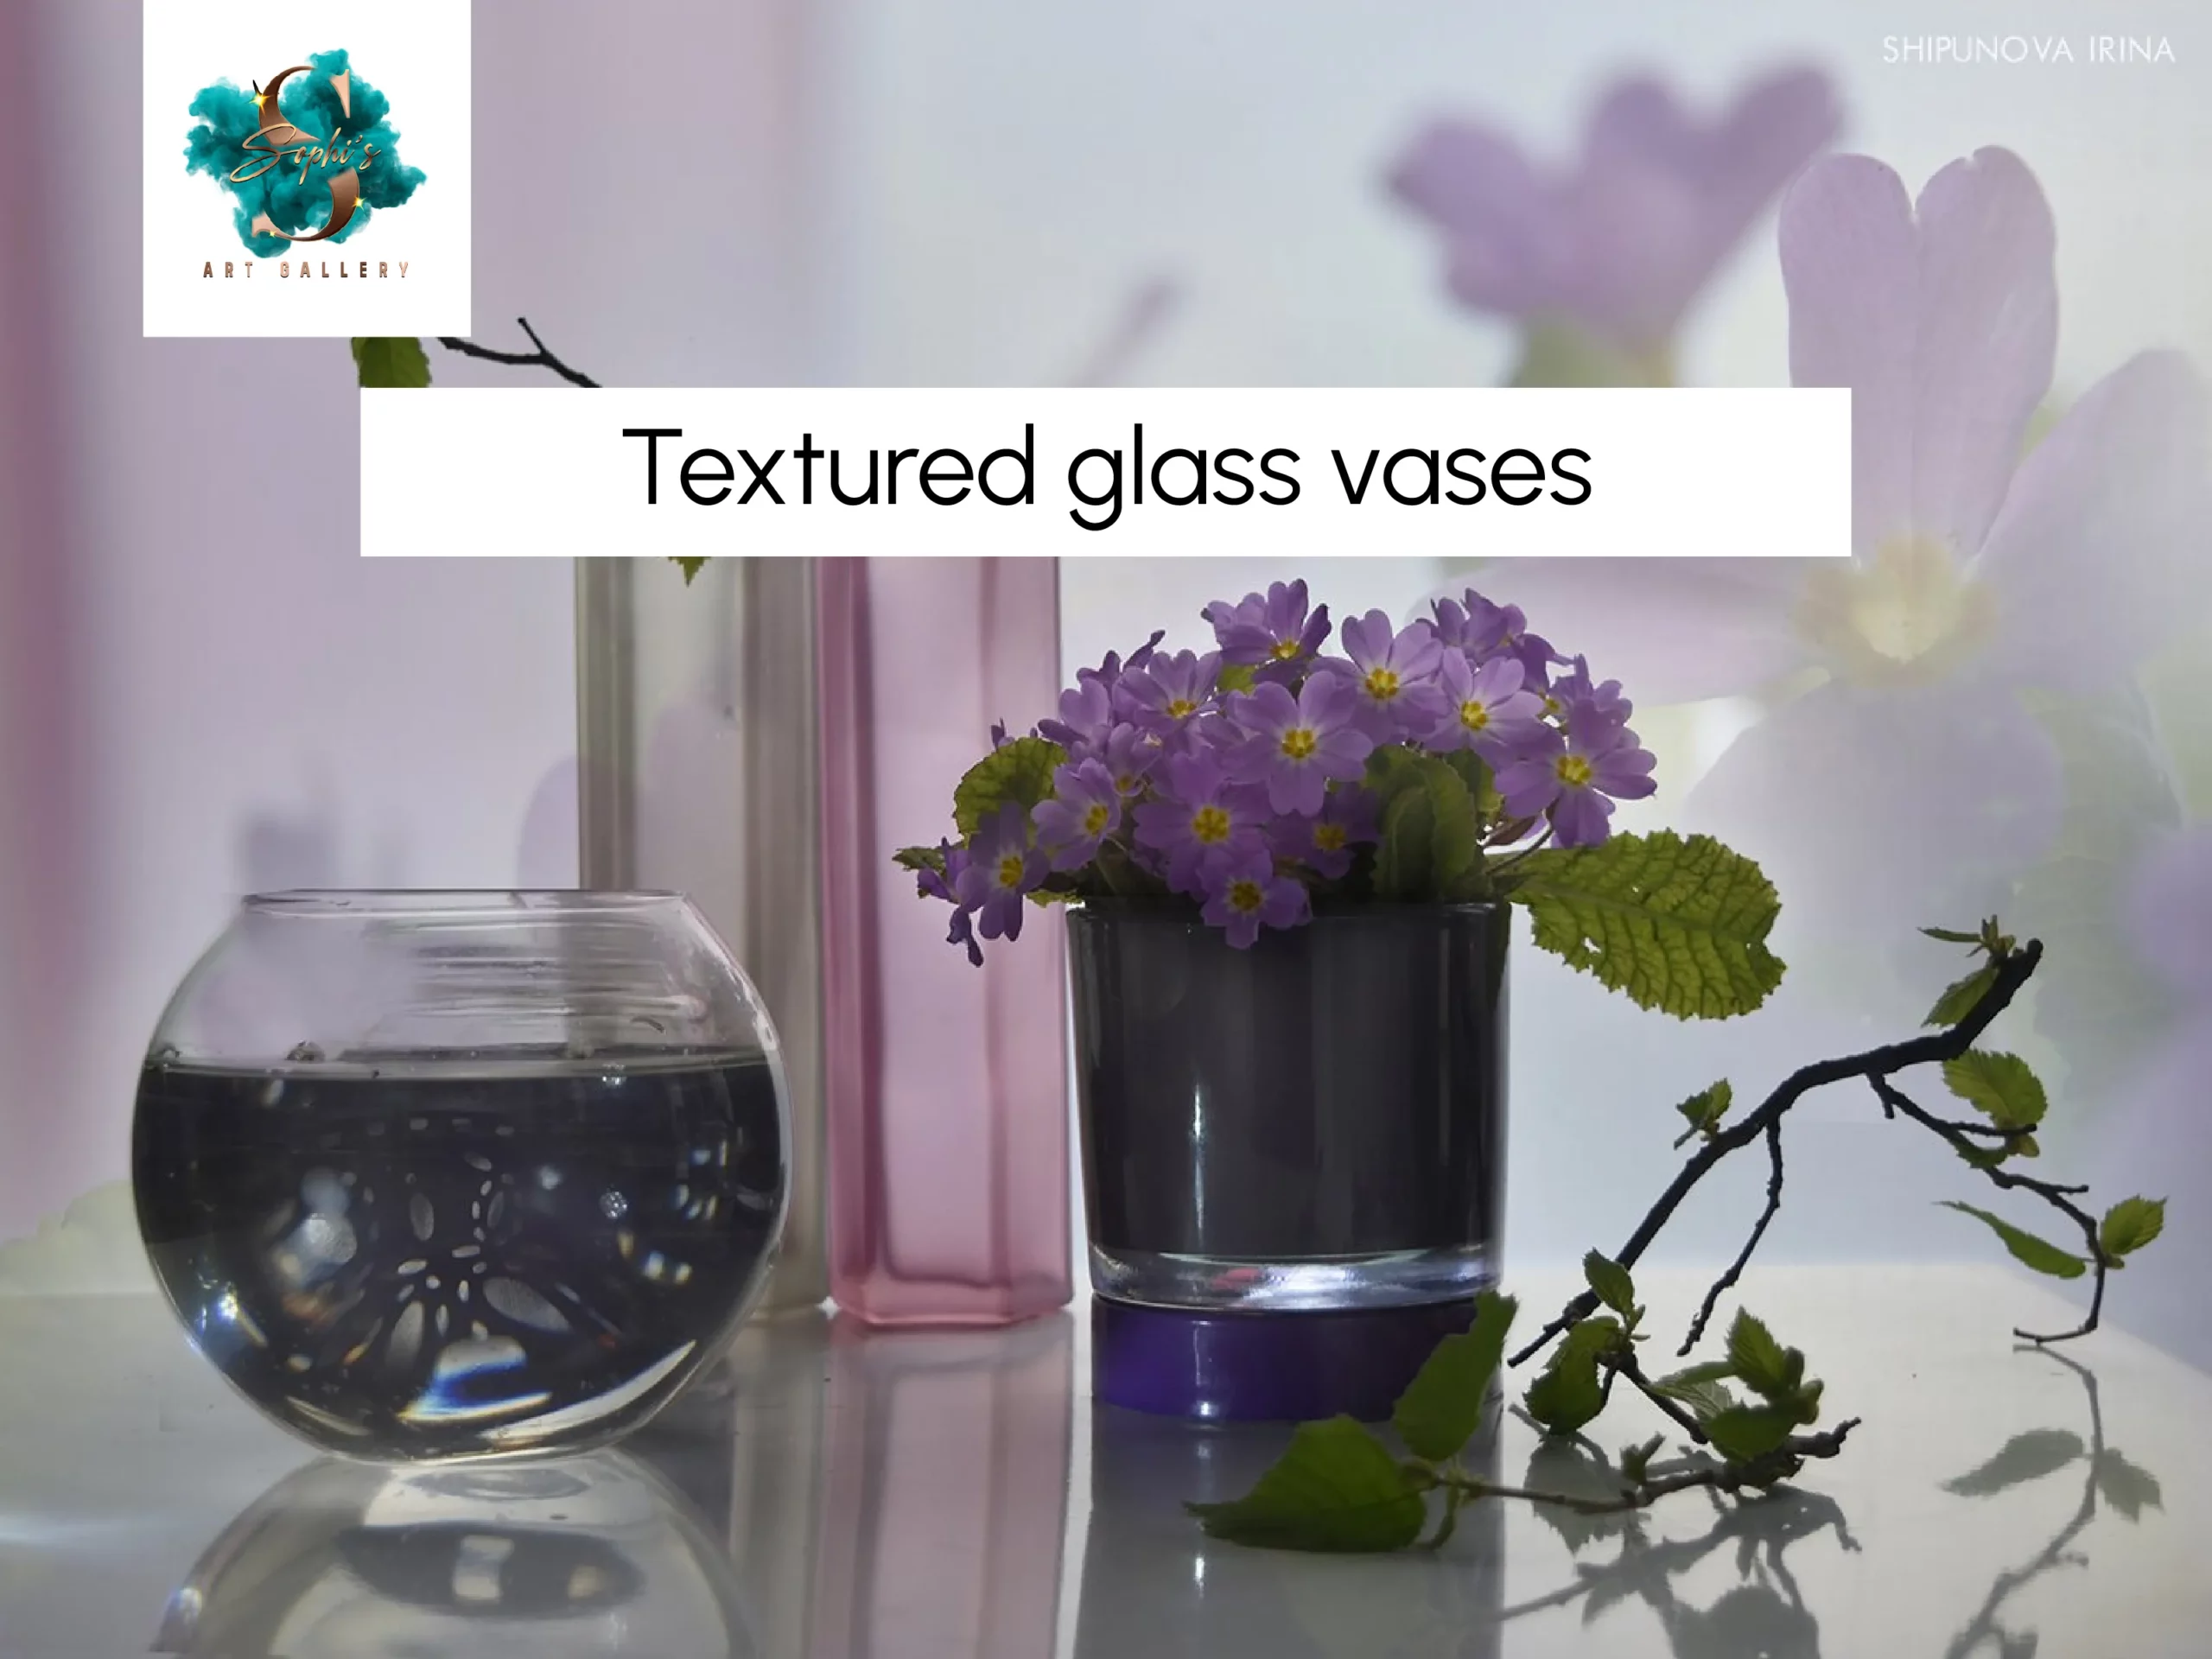 Textured glass vases